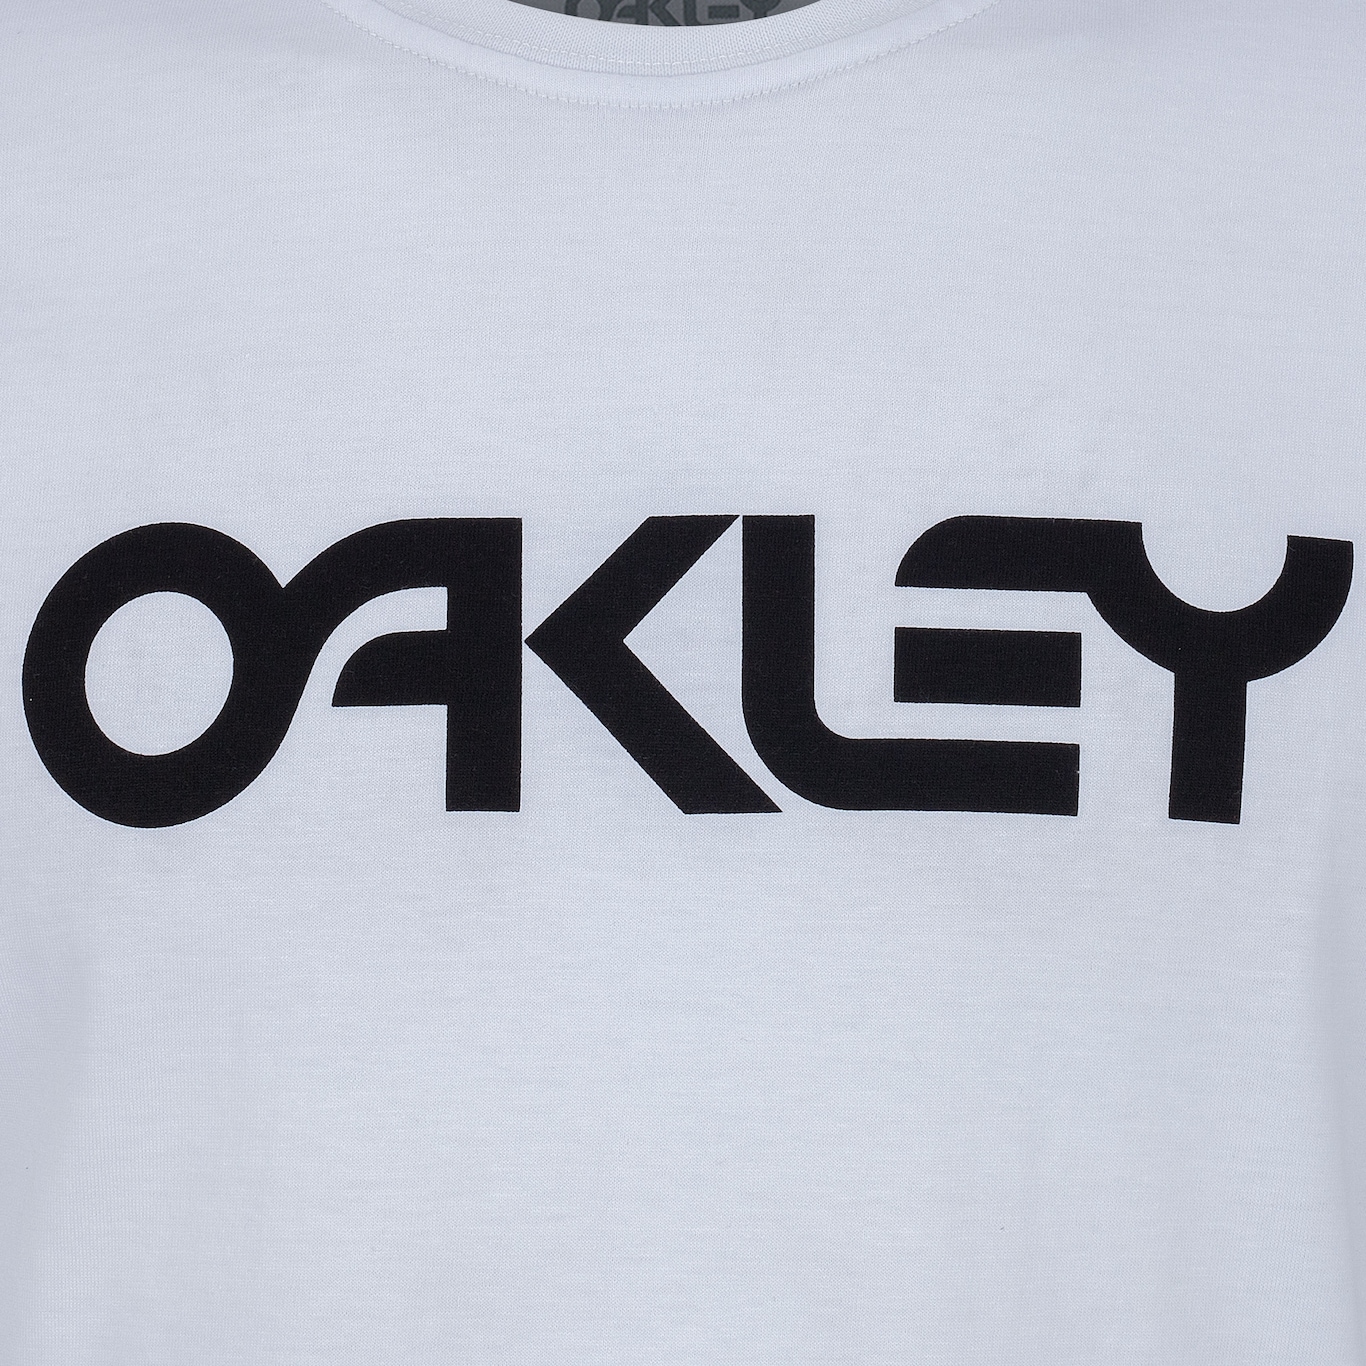 Camiseta Oakley Iconic Tee - Vermelho - M